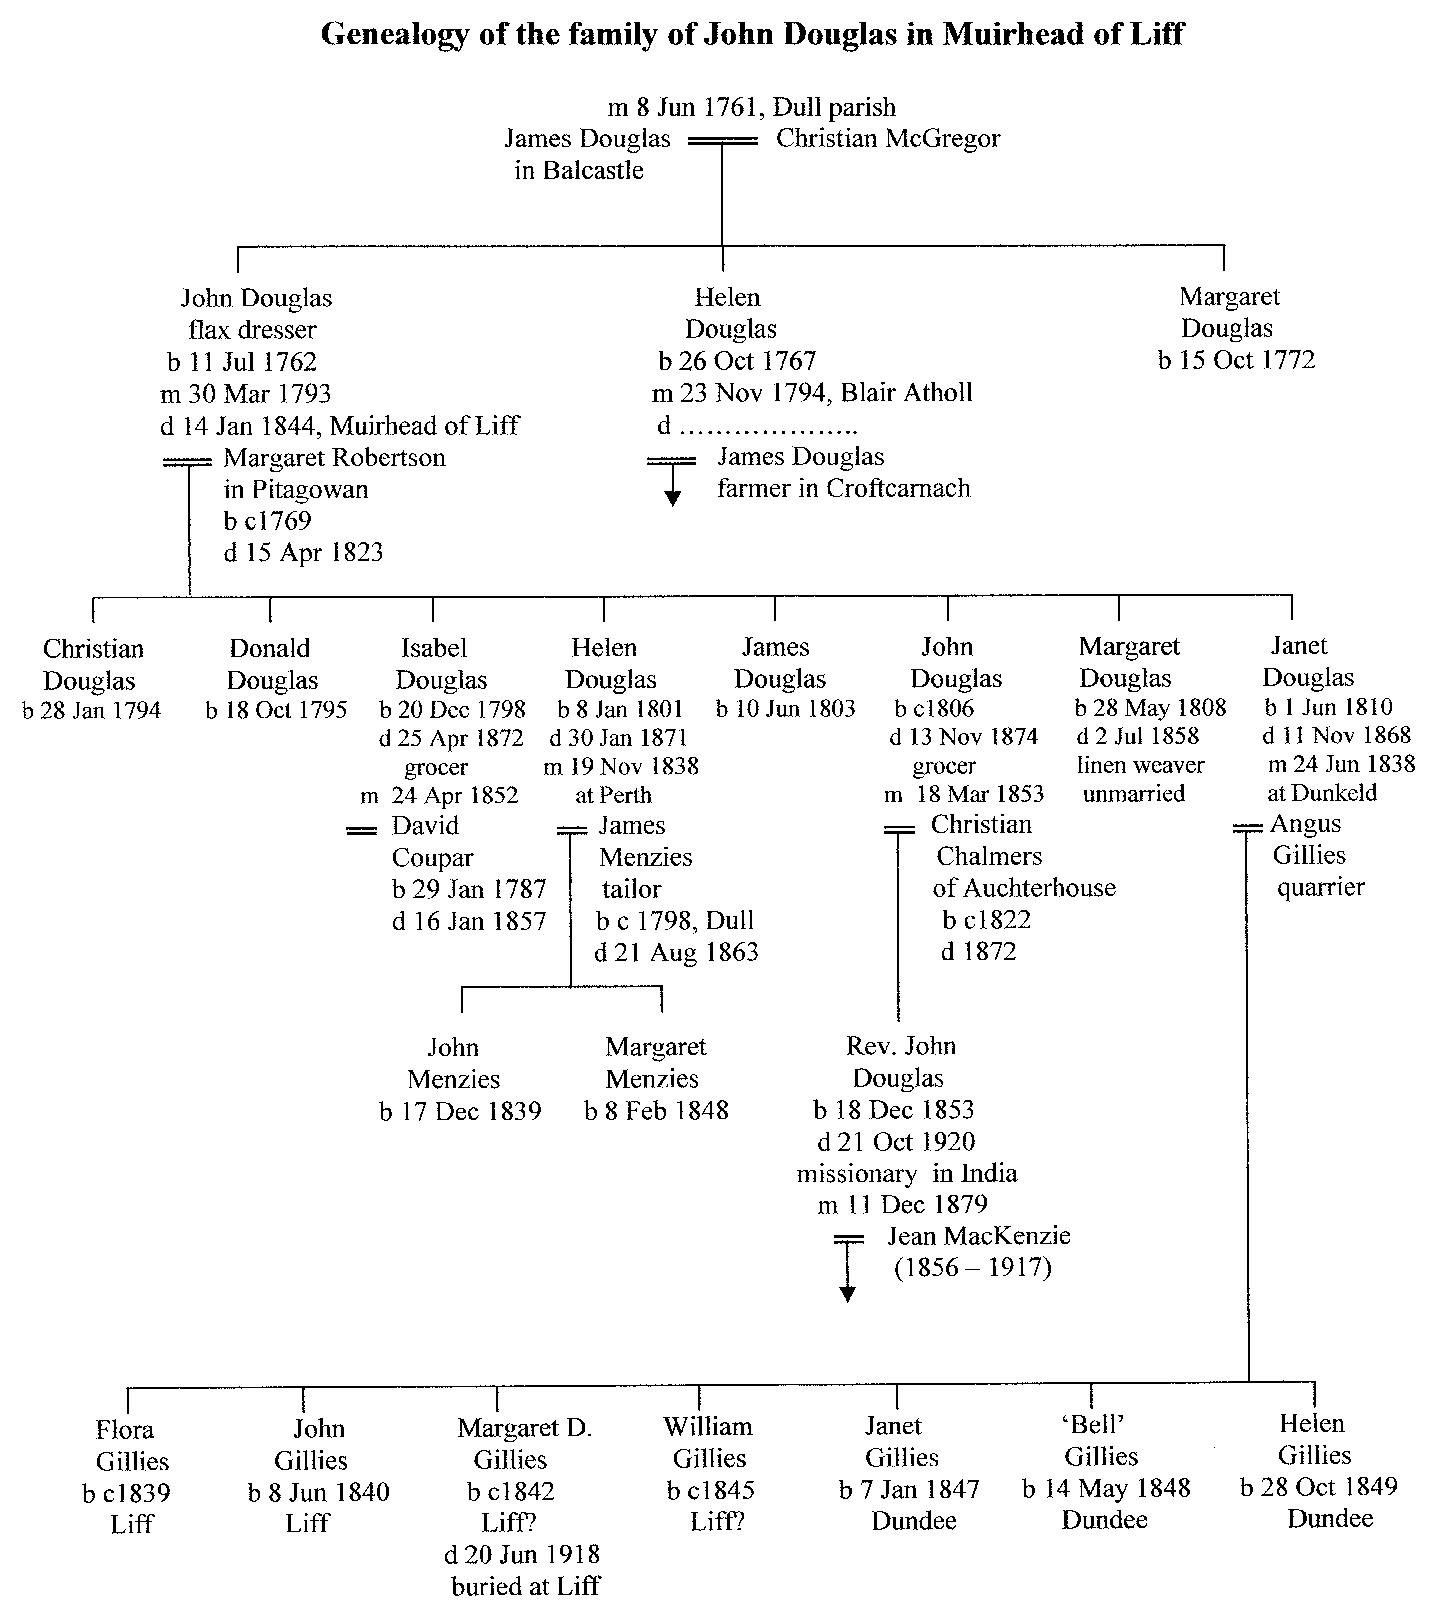 Genealogy of the family of John Douglas in Muirhead, Liff